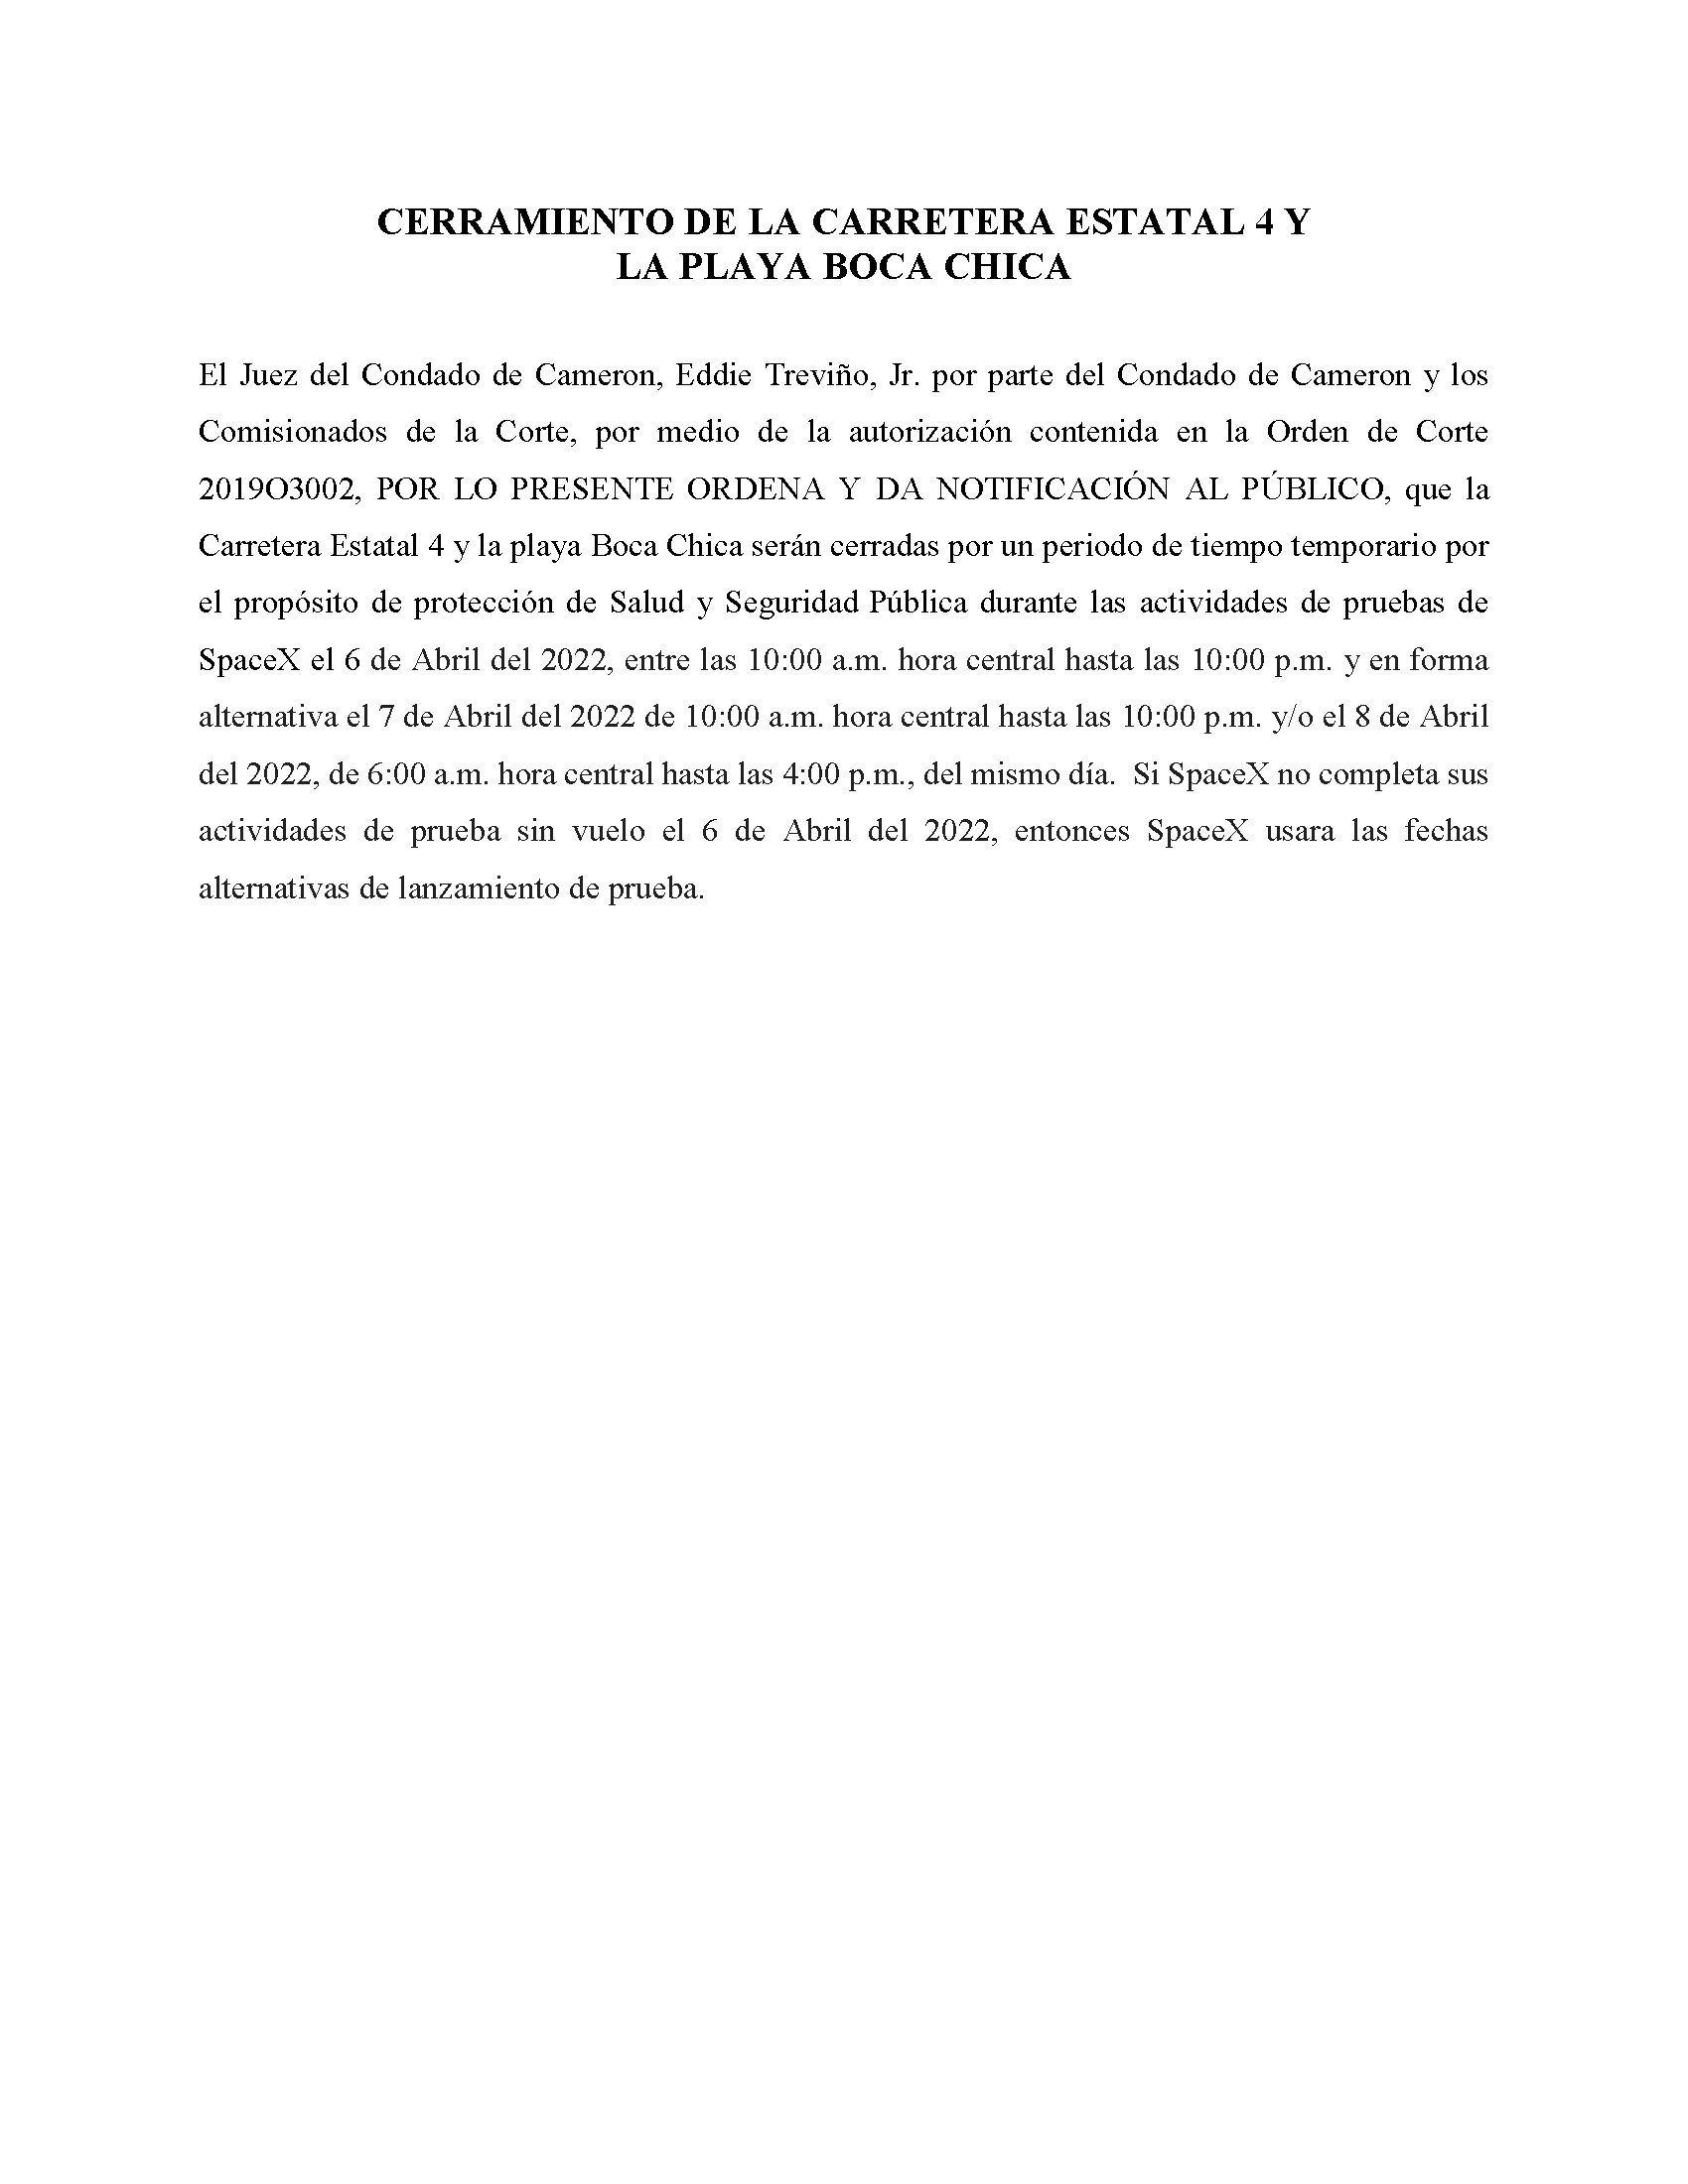 ORDER.CLOSURE OF HIGHWAY 4 Y LA PLAYA BOCA CHICA.SPANISH.04.06.2022